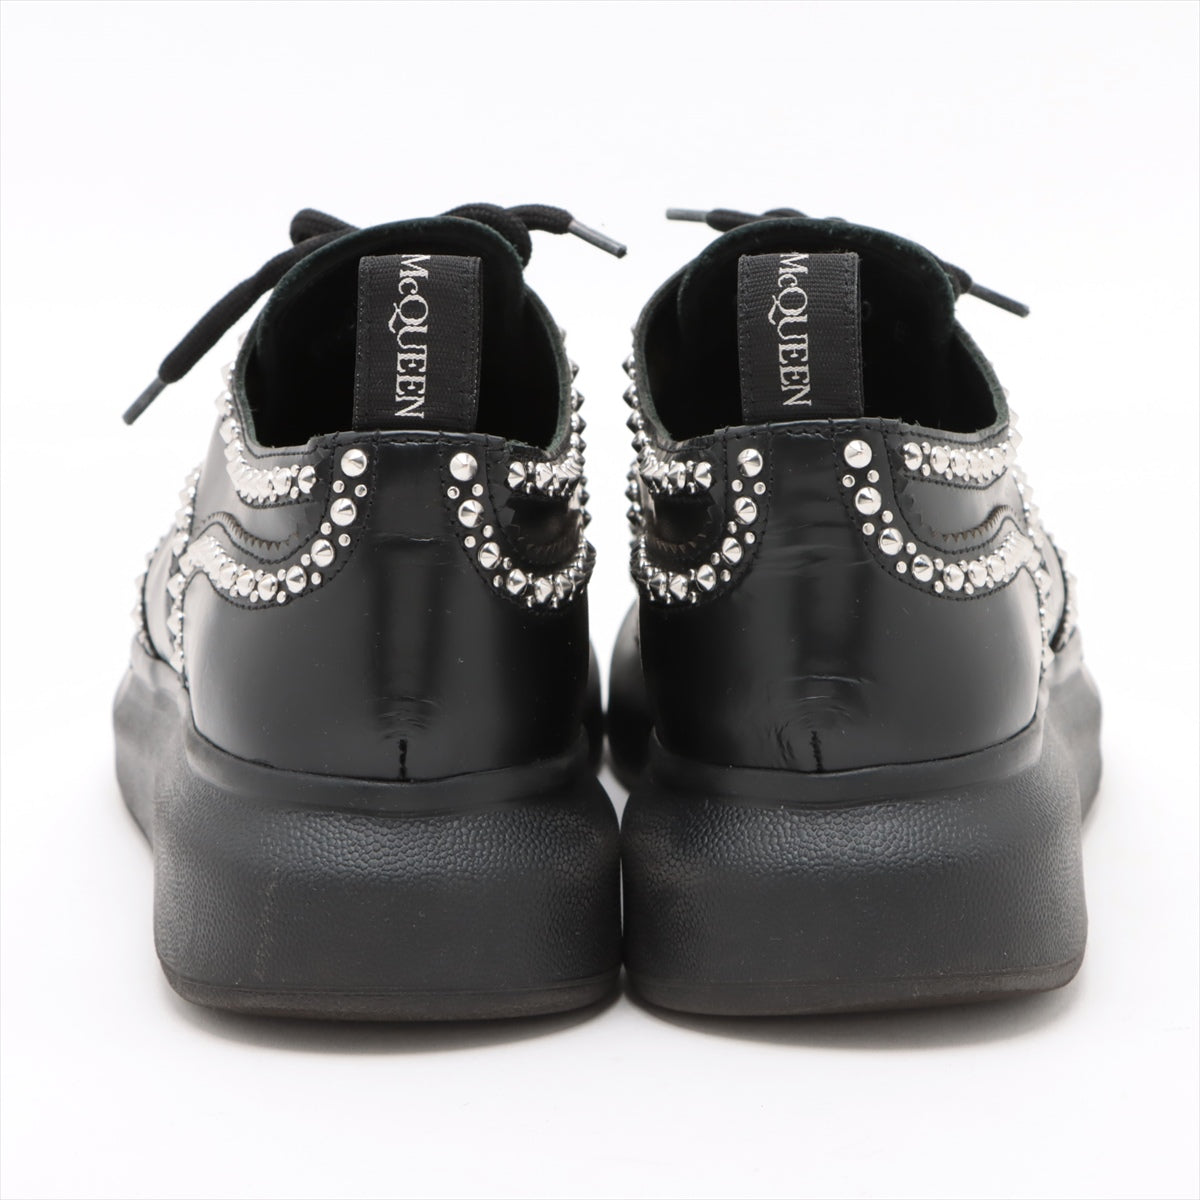 Alexander McQueen Leather Leather shoes 40E Men's Black 610809 Studs